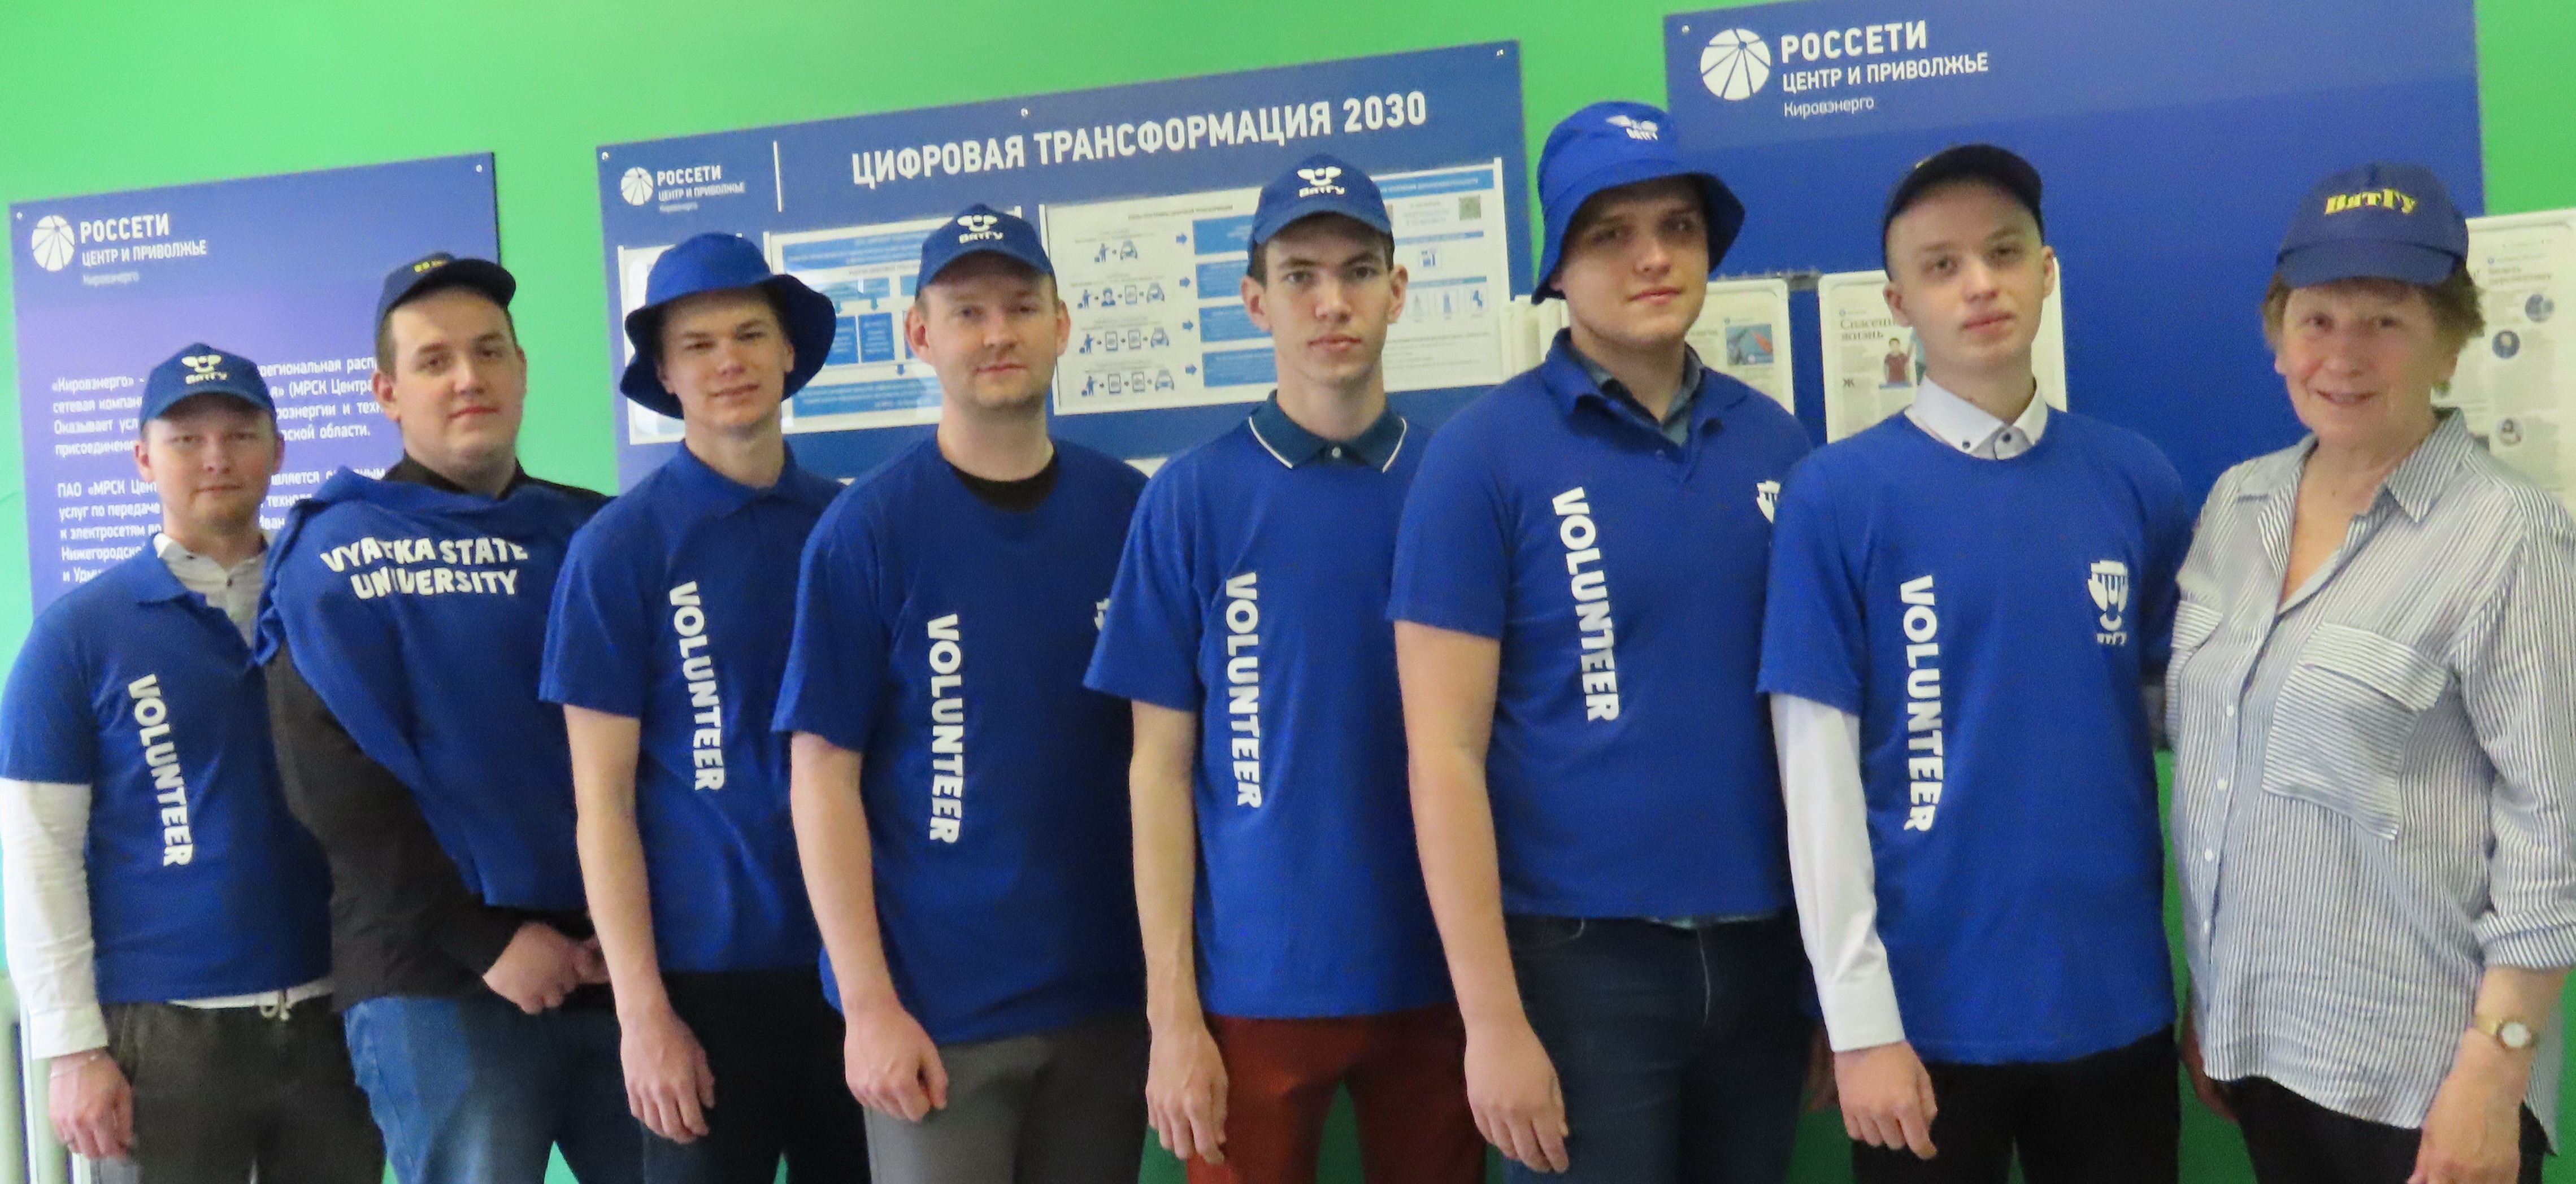 Студенты ВятГУ - лидеры олимпиады по электроэнергетическим системам